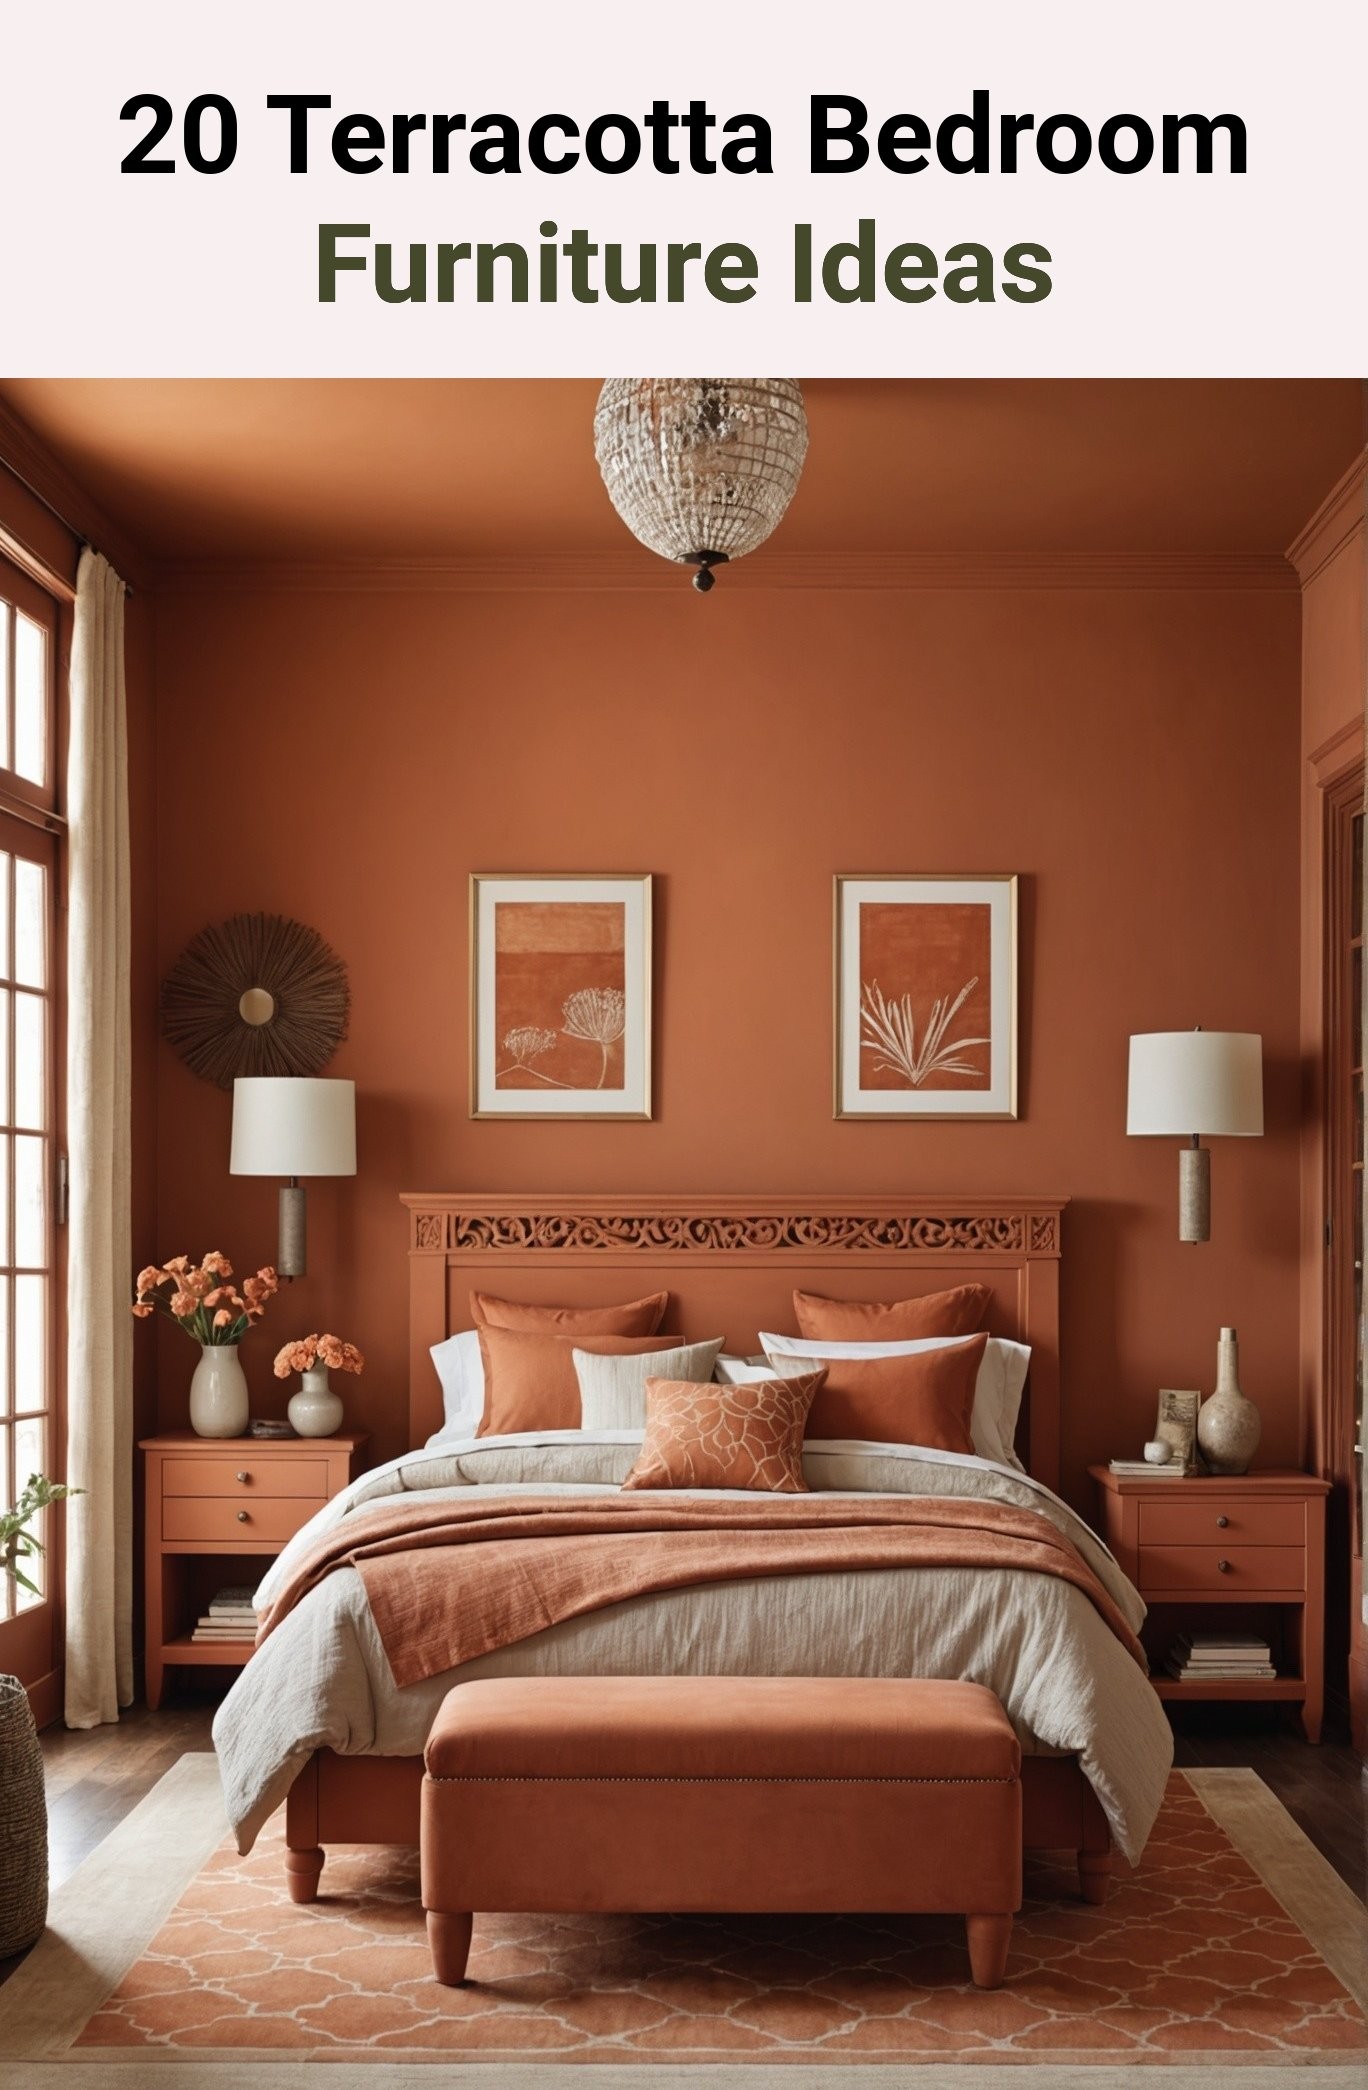 20 Terracotta Bedroom Furniture Ideas